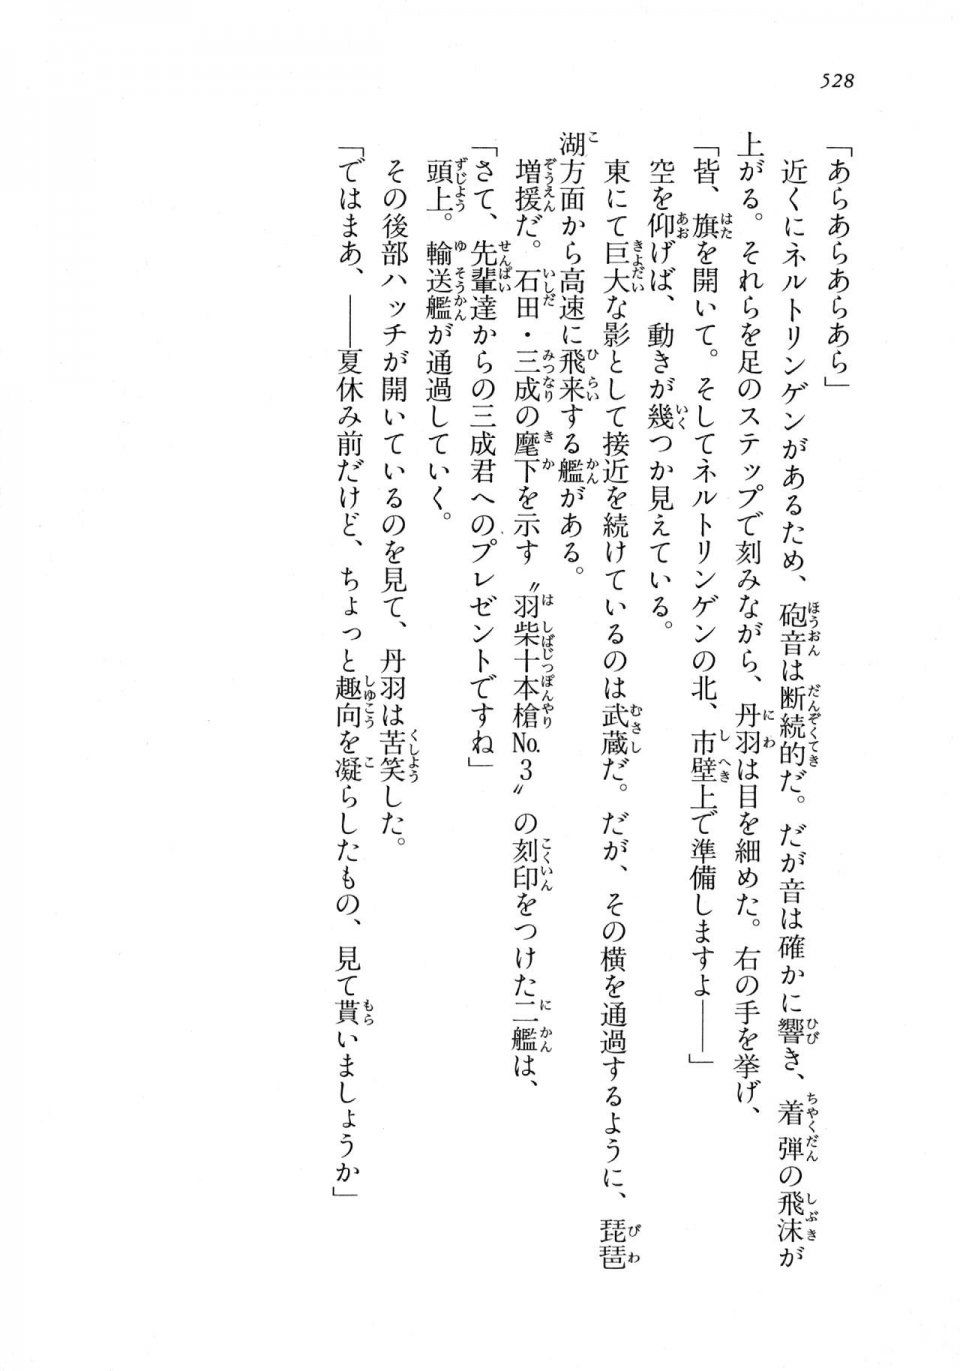 Kyoukai Senjou no Horizon LN Vol 18(7C) Part 1 - Photo #528